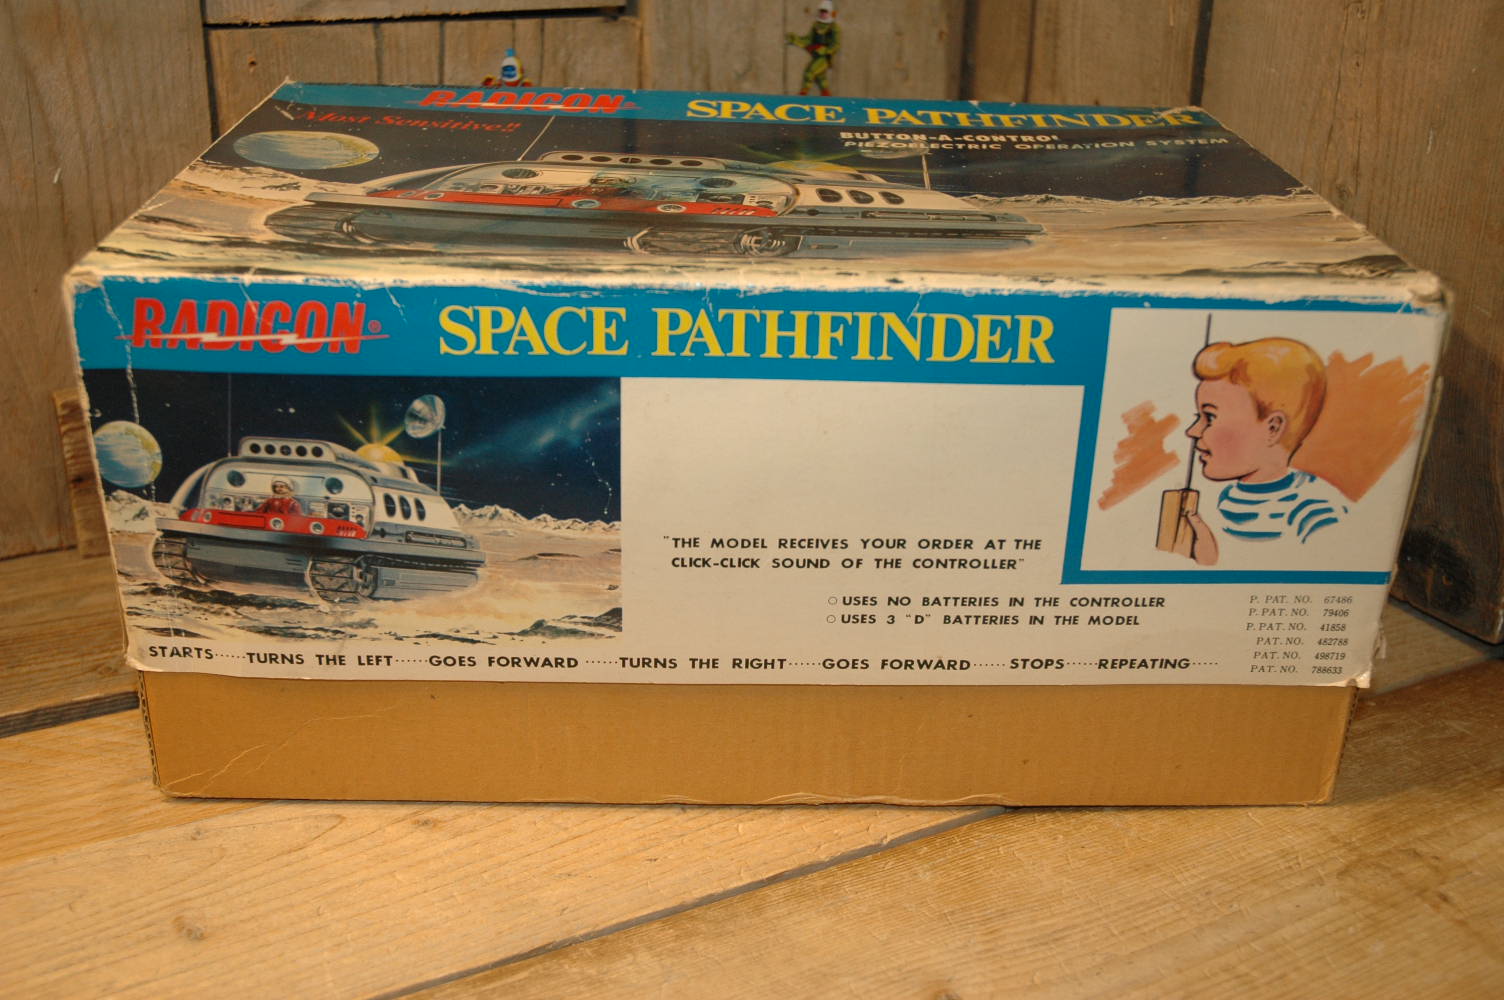 Modern Toys – Radicon Space Pathfinder